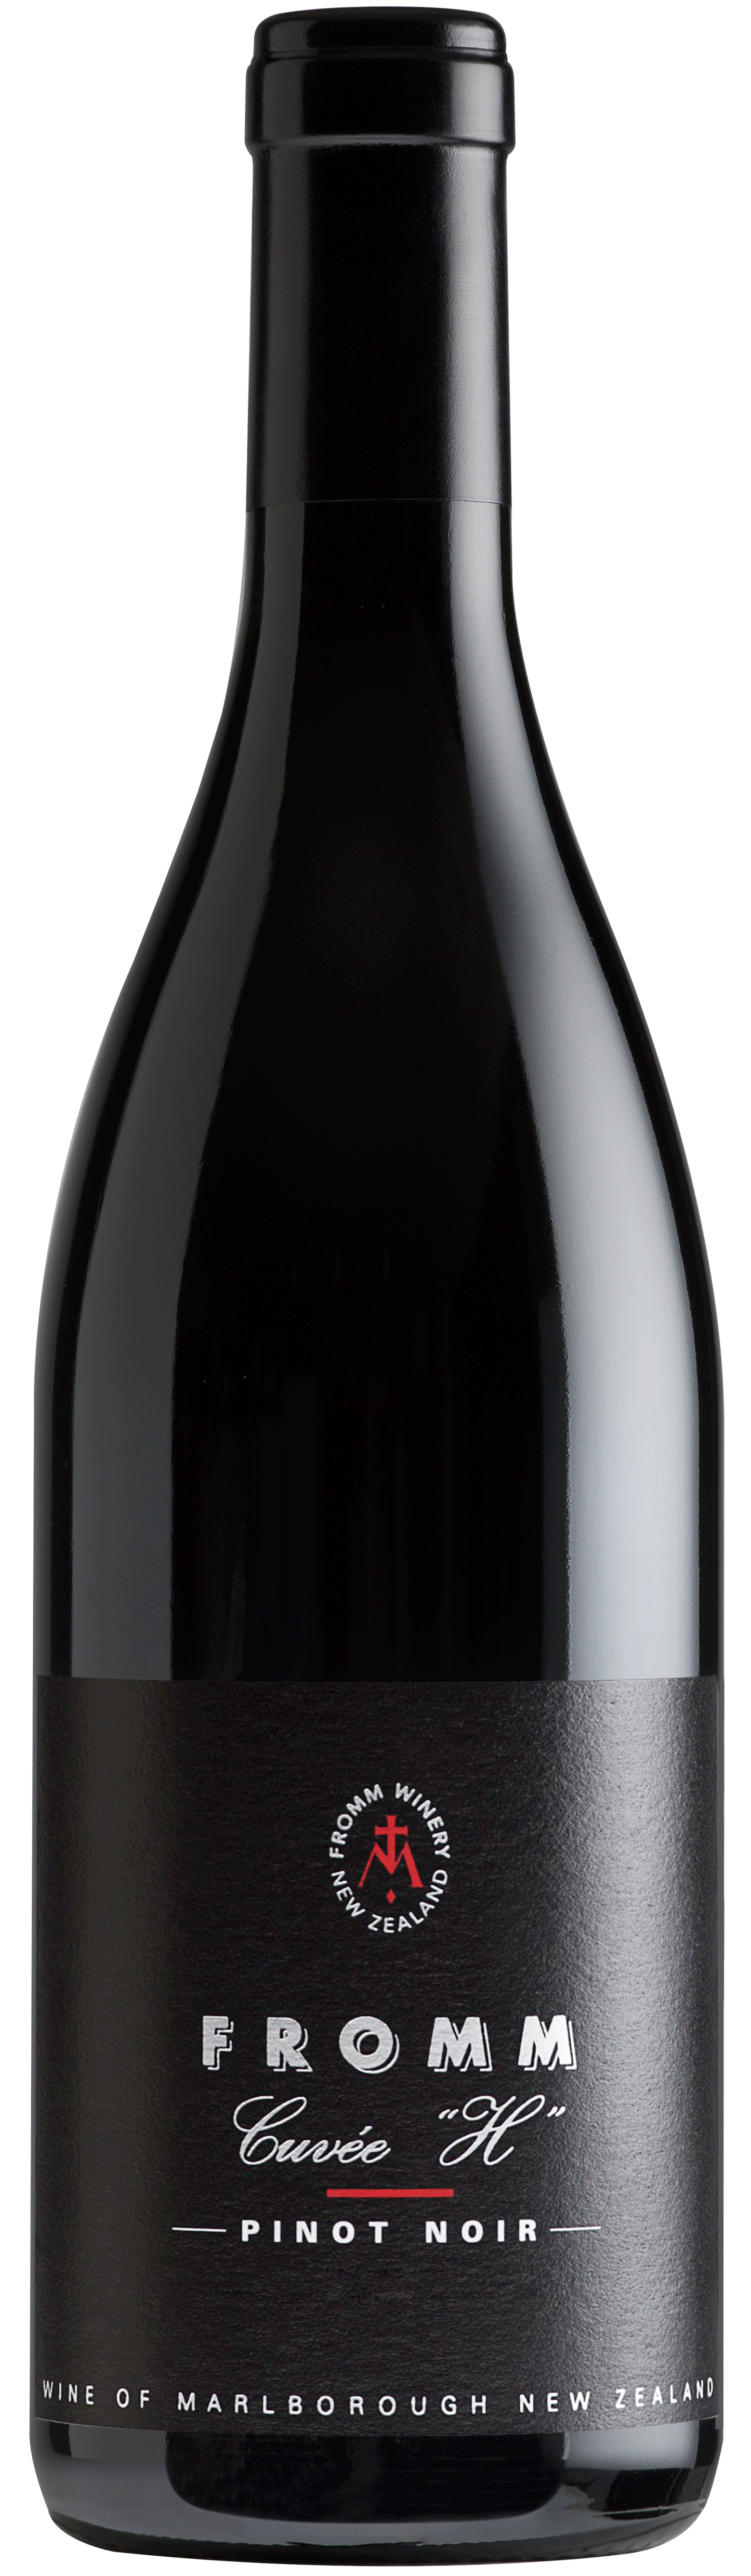 FROMM Pinot Noir Cuvée "H" 2017 - Magnum